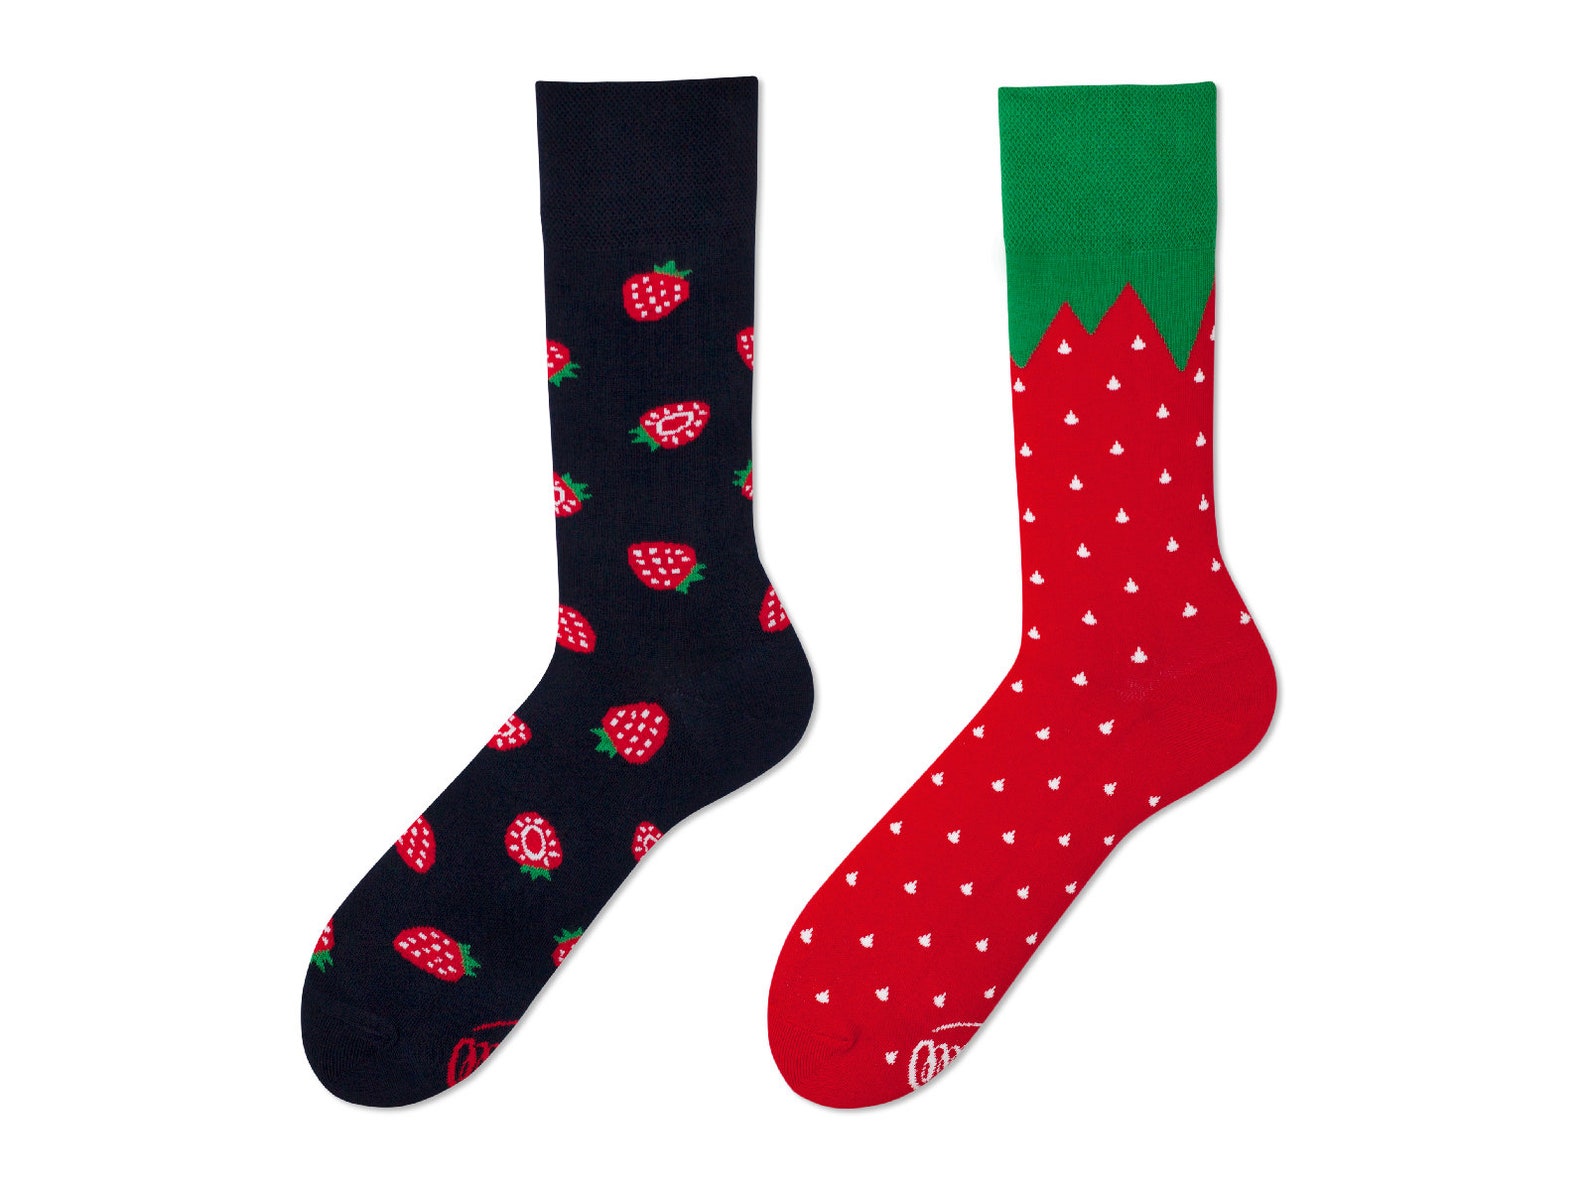 Strawberries Socks mismatched socks mens socks casual | Etsy